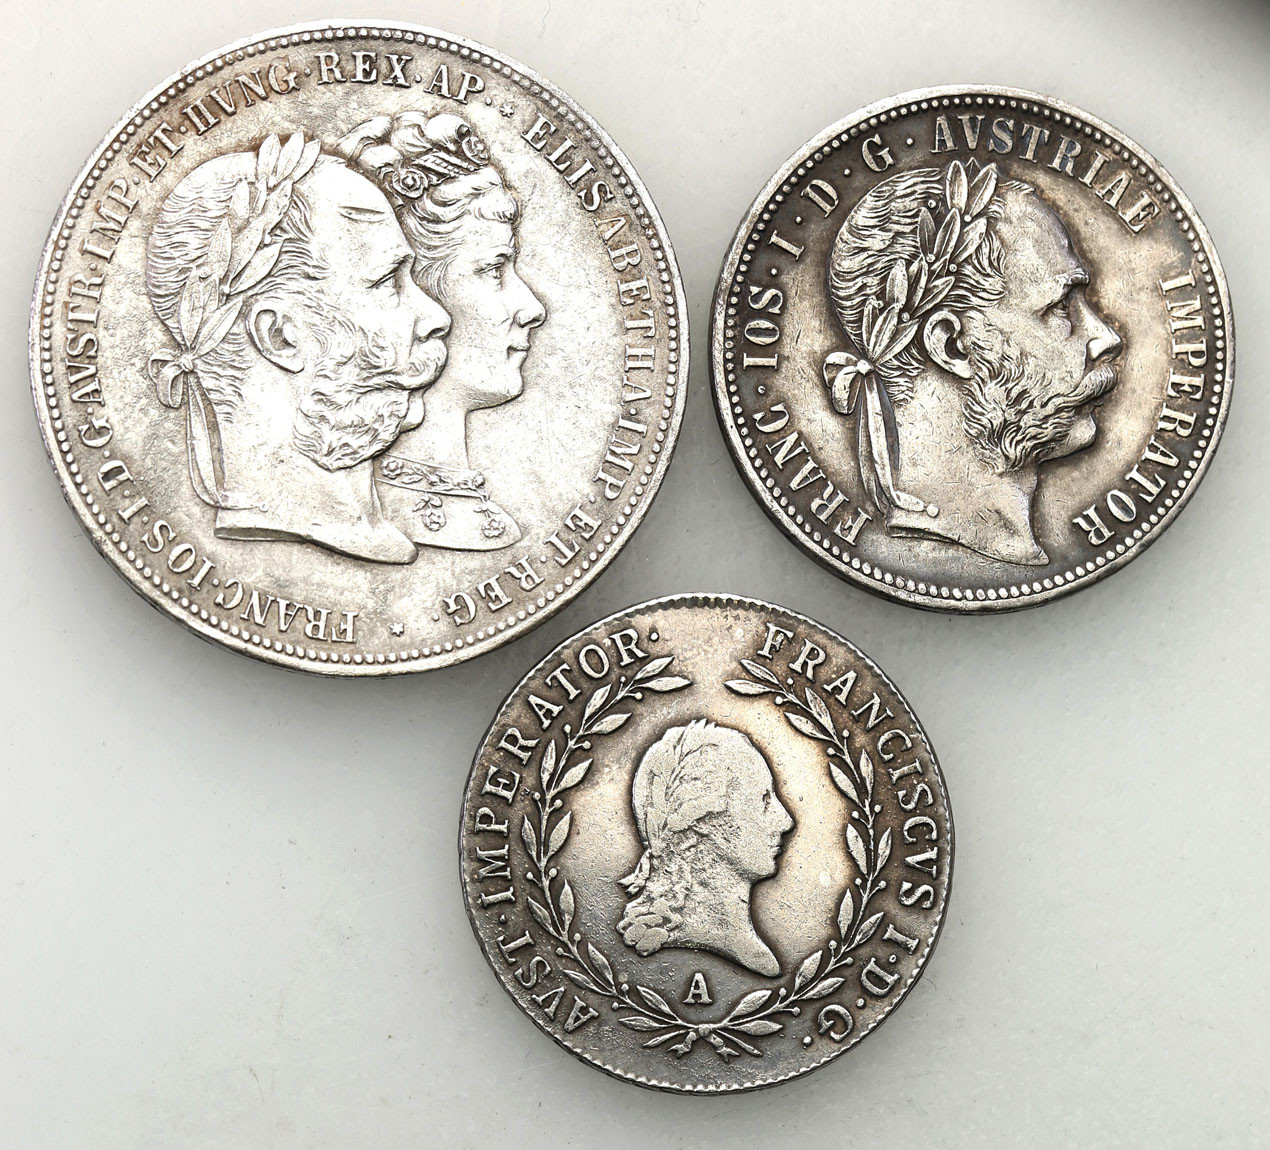 Austria. 2 guldeny 1879, floren 1878, 20 krajcarów 1817, zestaw 3 monet